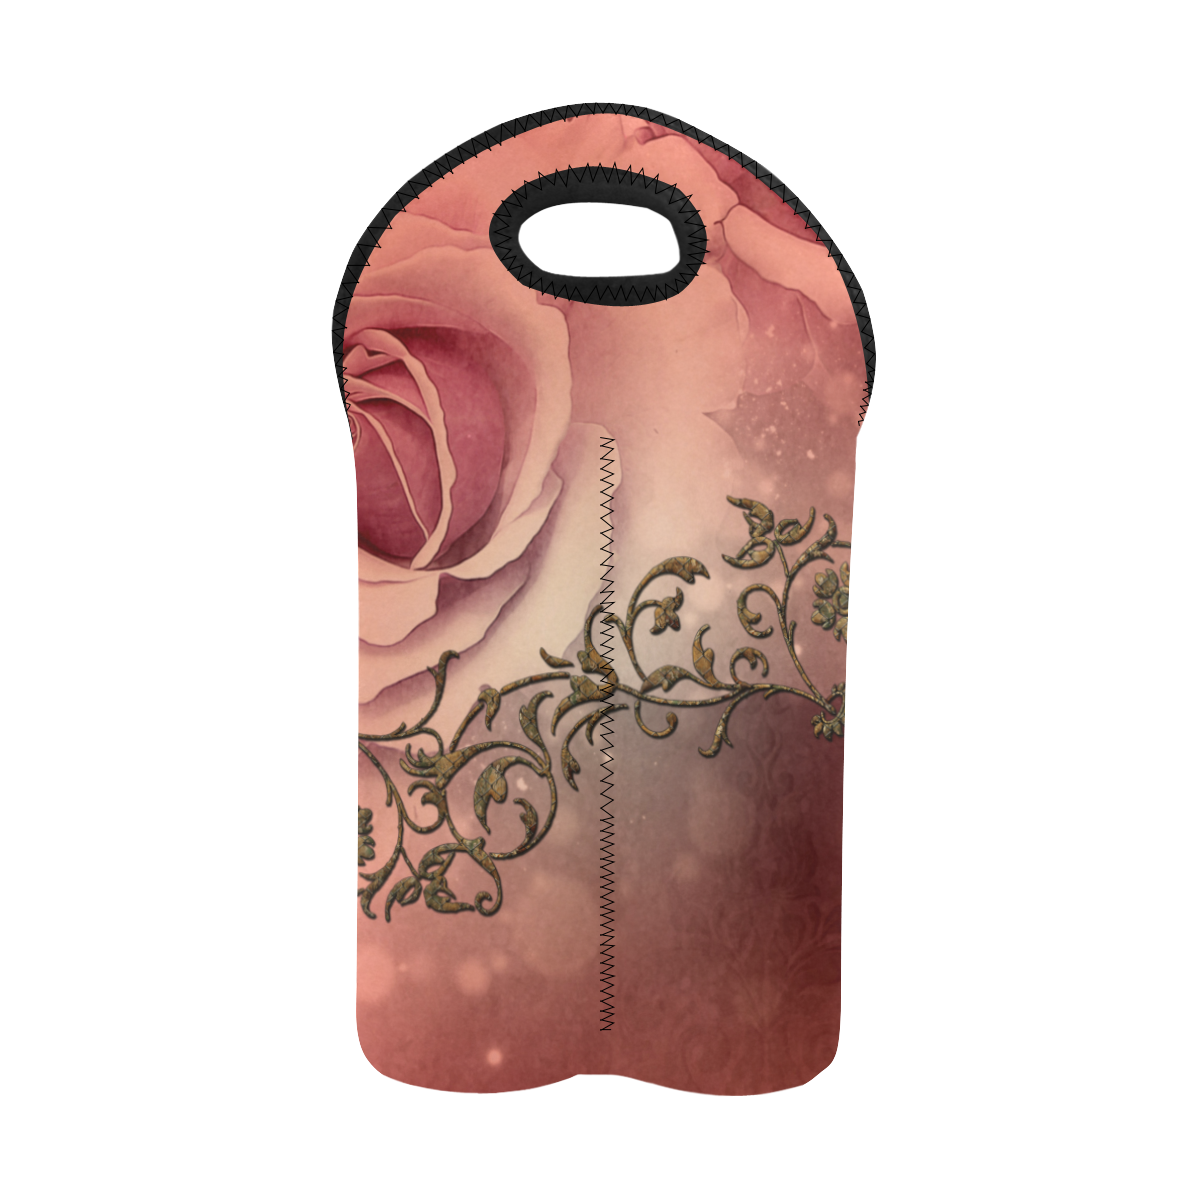 Wonderful roses with floral elements 2-Bottle Neoprene Wine Bag